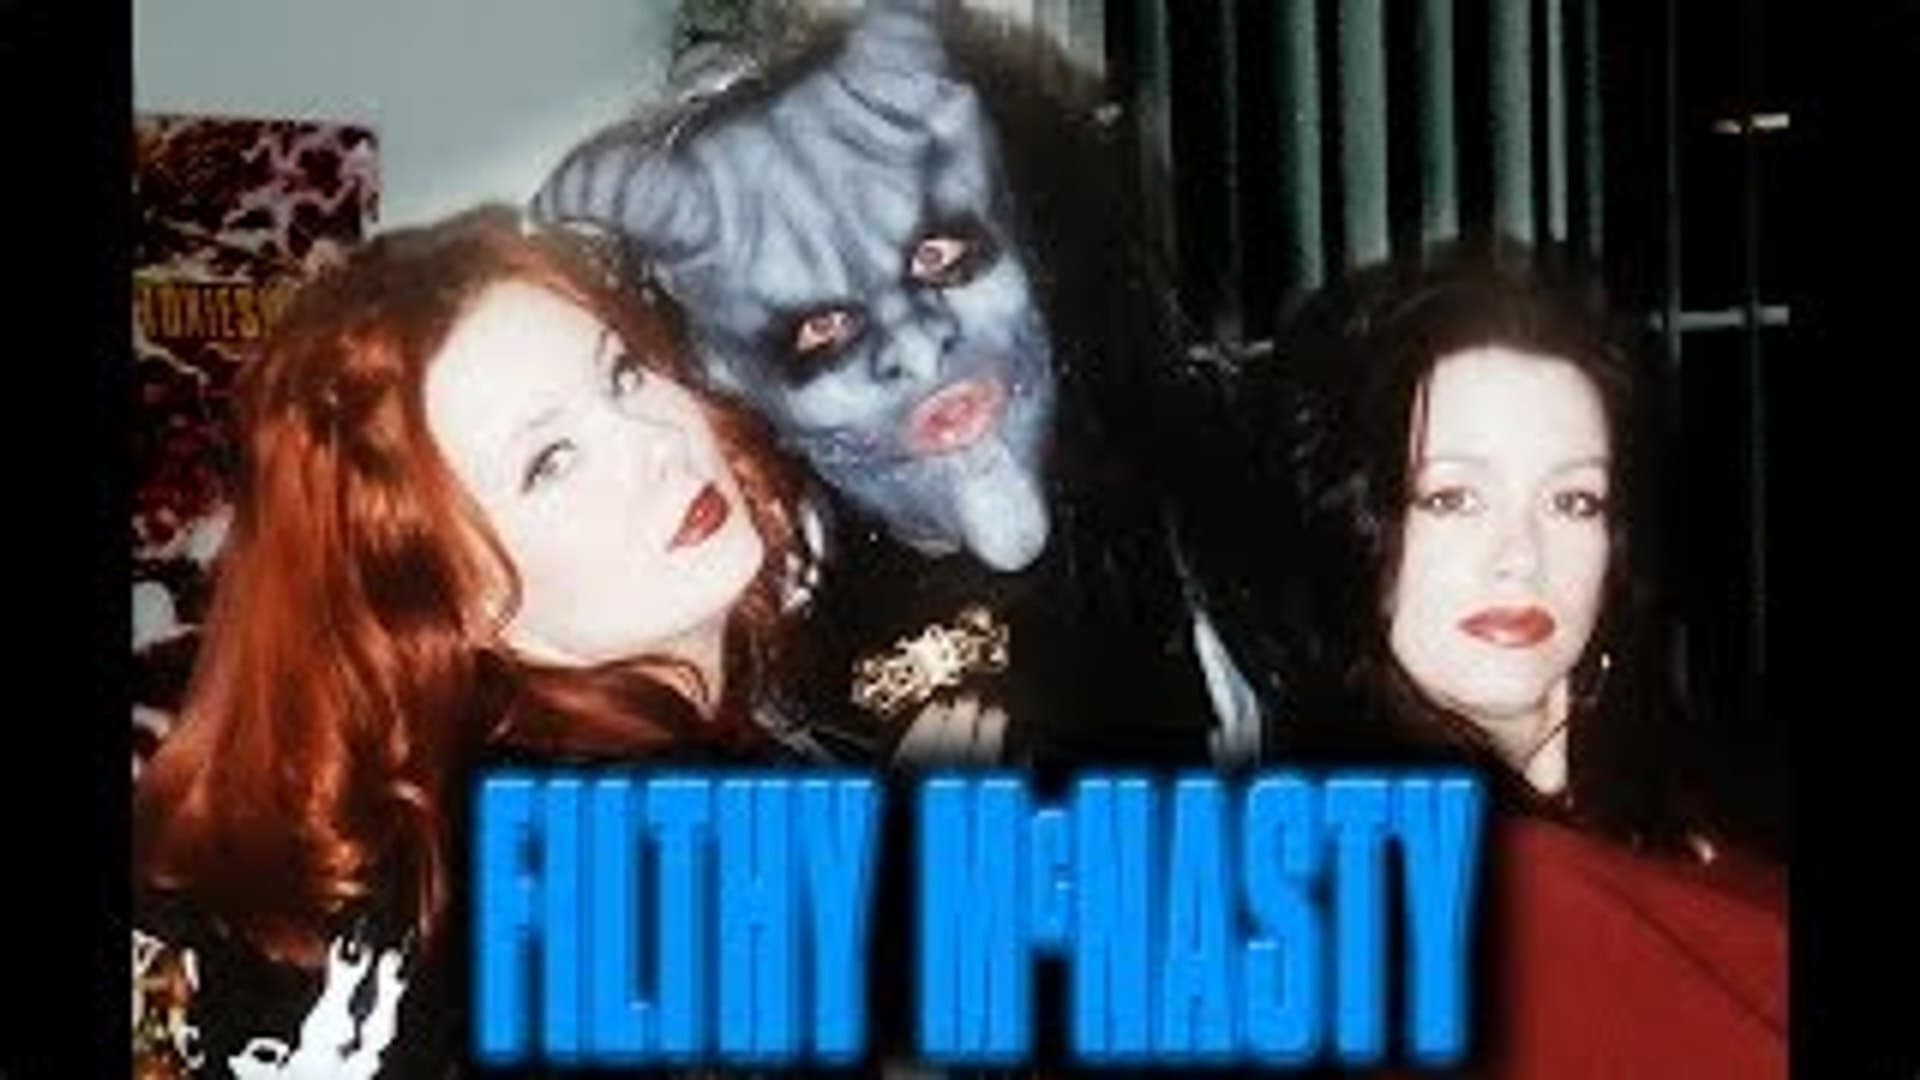 Filthy McNastiest: Apocalypse F.! (2005)